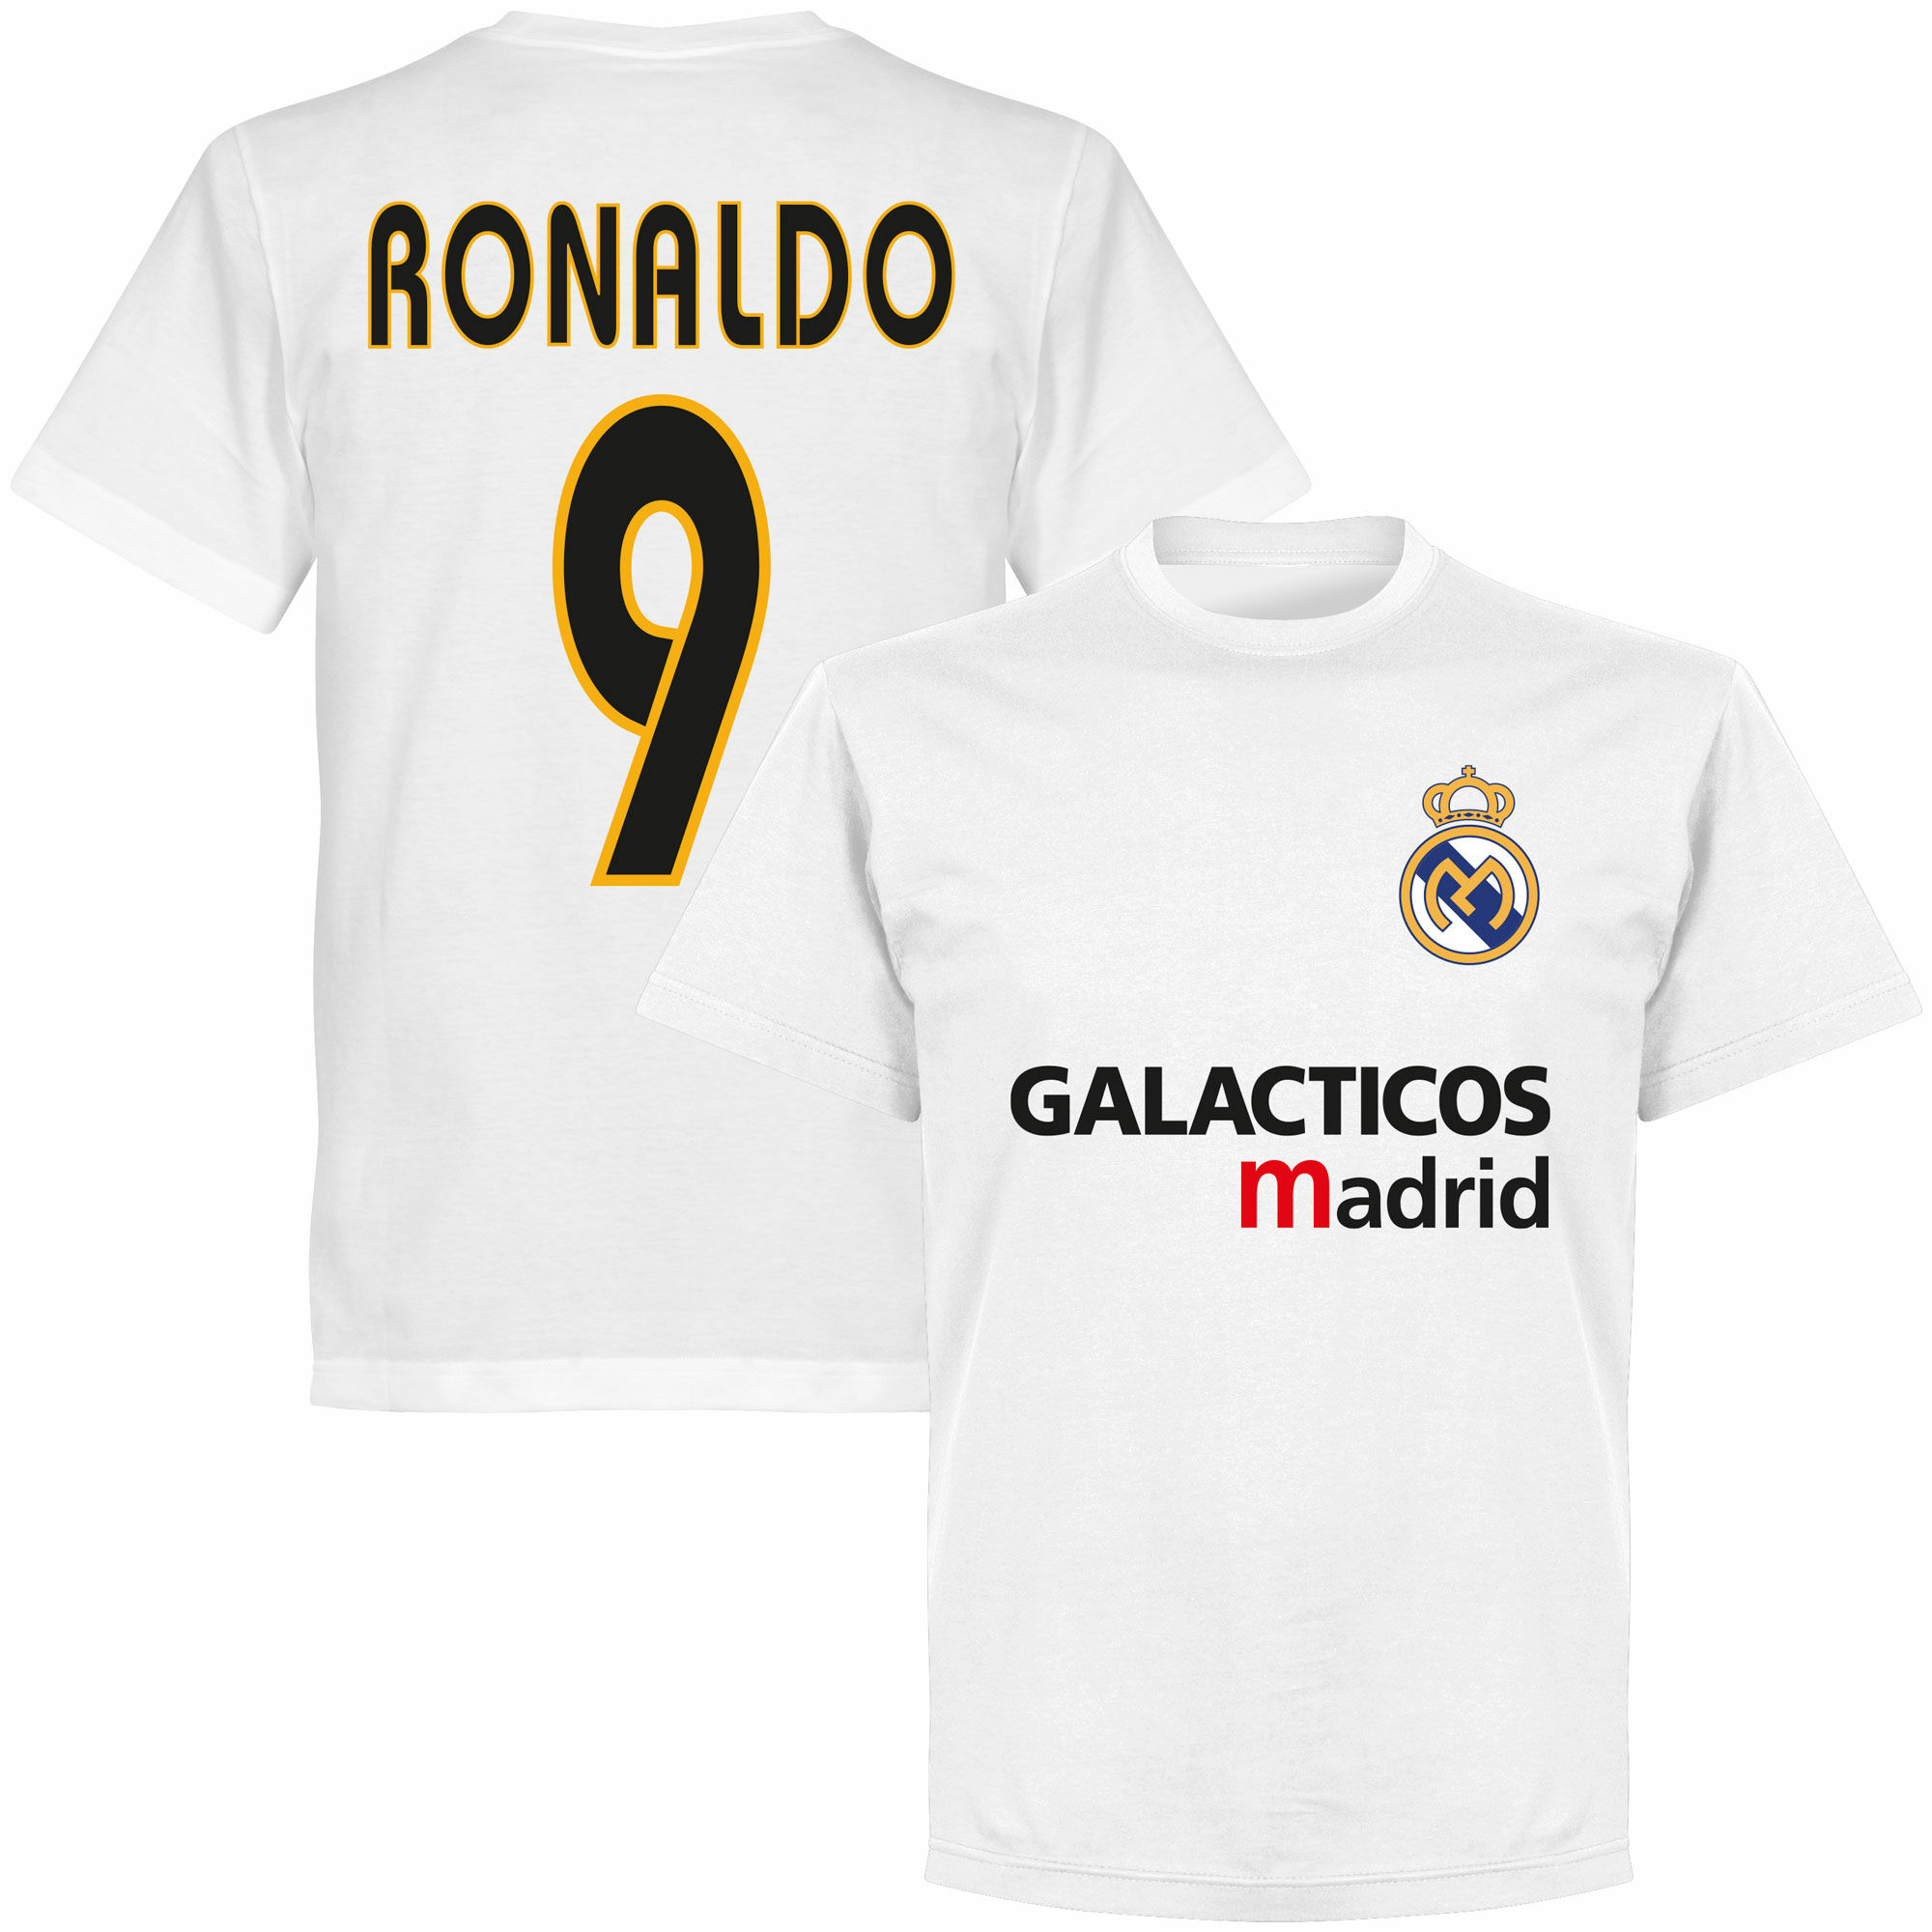 Real Madrid - Tričko "Galácticos Madrid" - bílé, Ronaldo, číslo 9